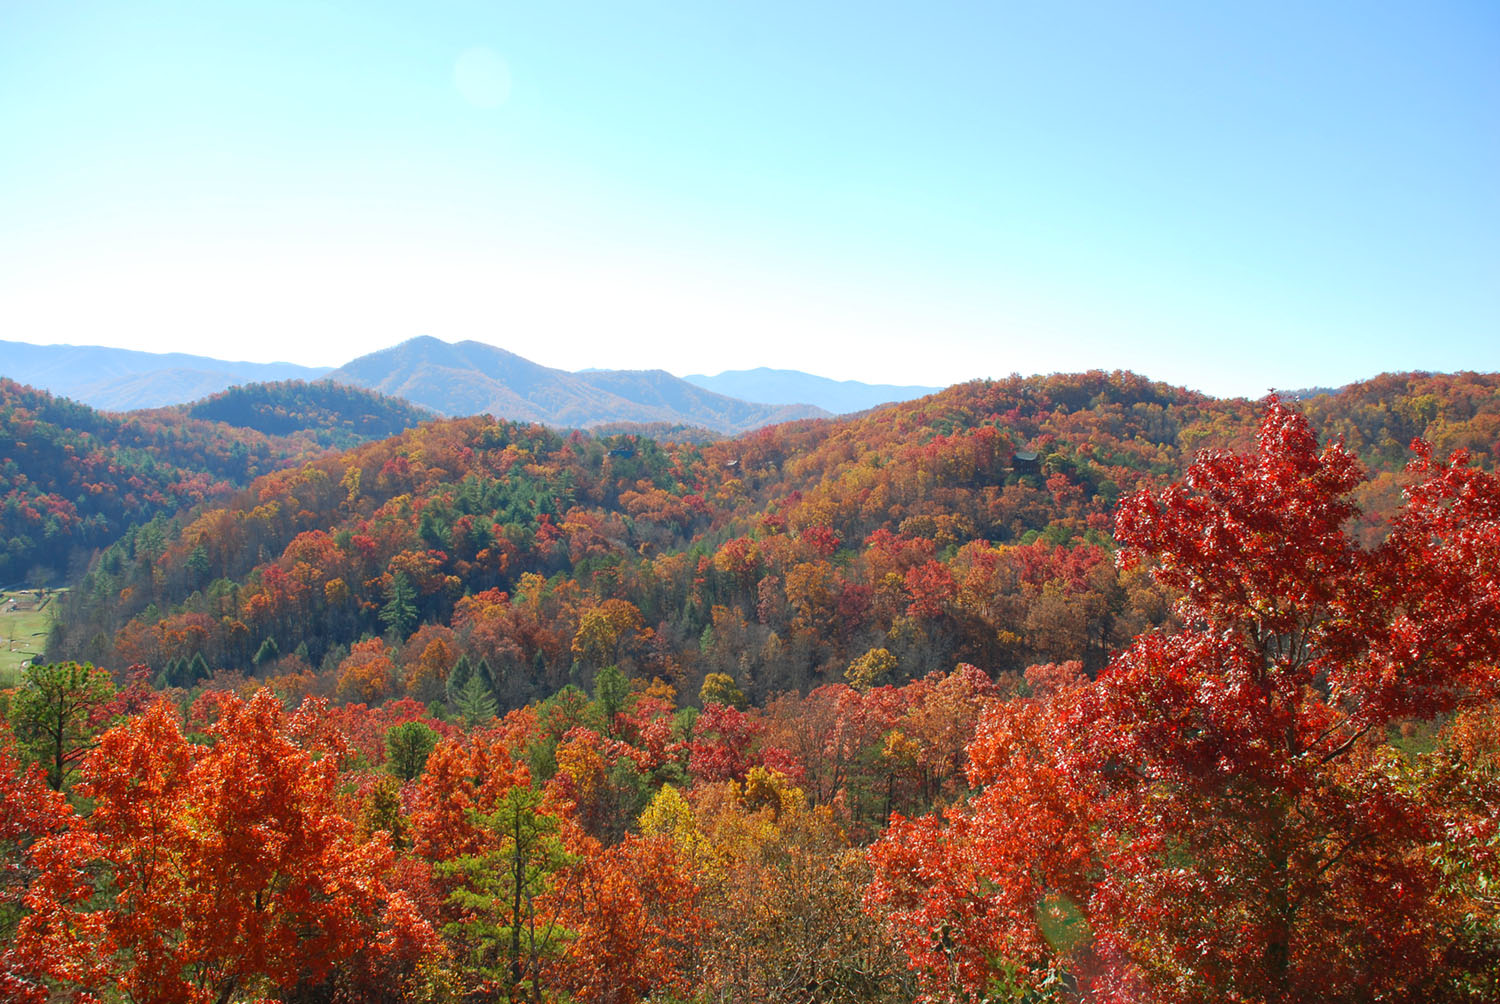 A view of the mountain range near Shiloh Mountain Cabin location